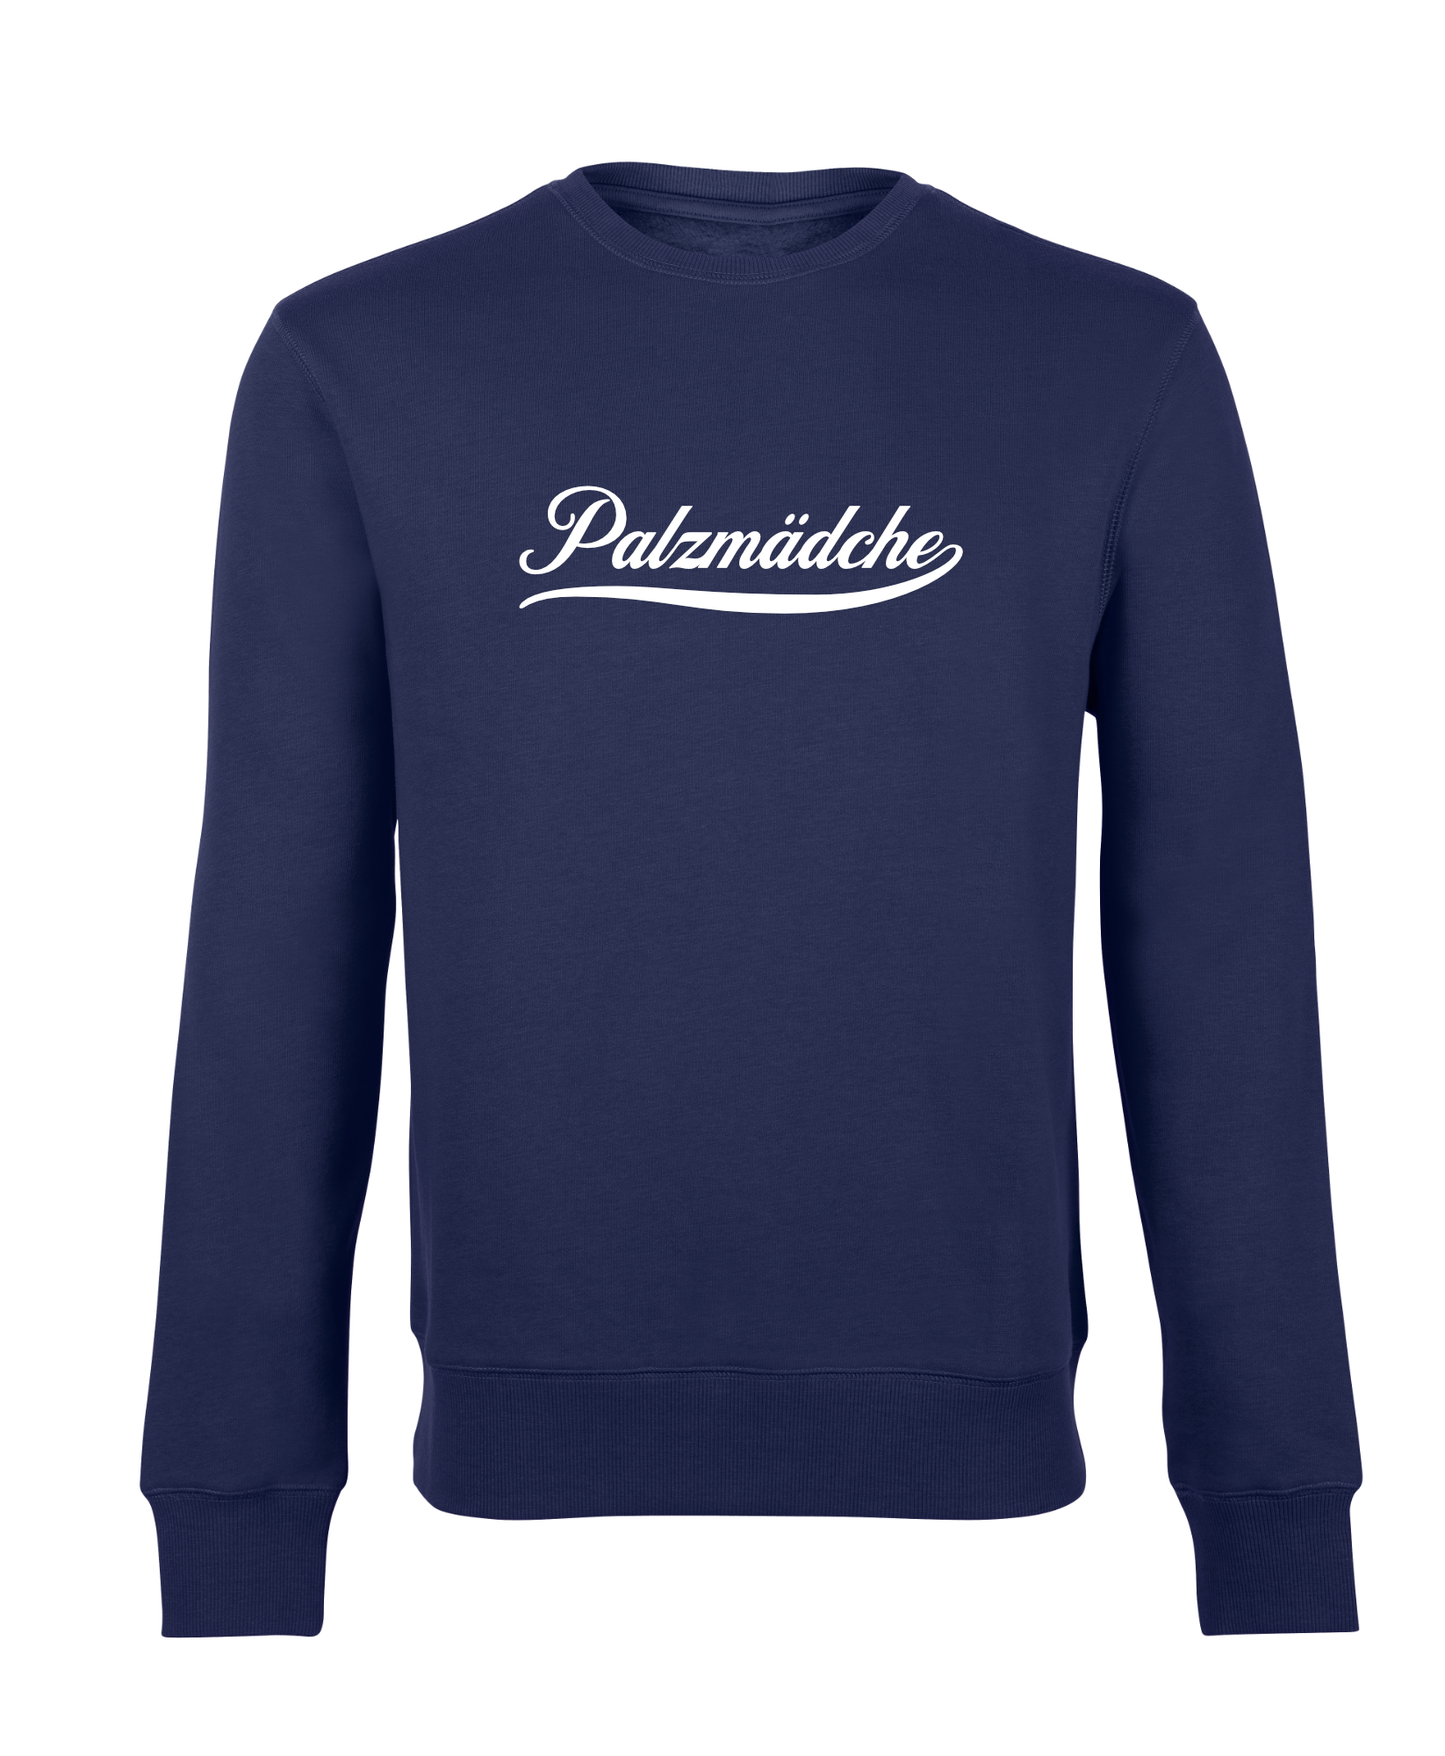 Palzmädche pREHmium - Sweatshirts